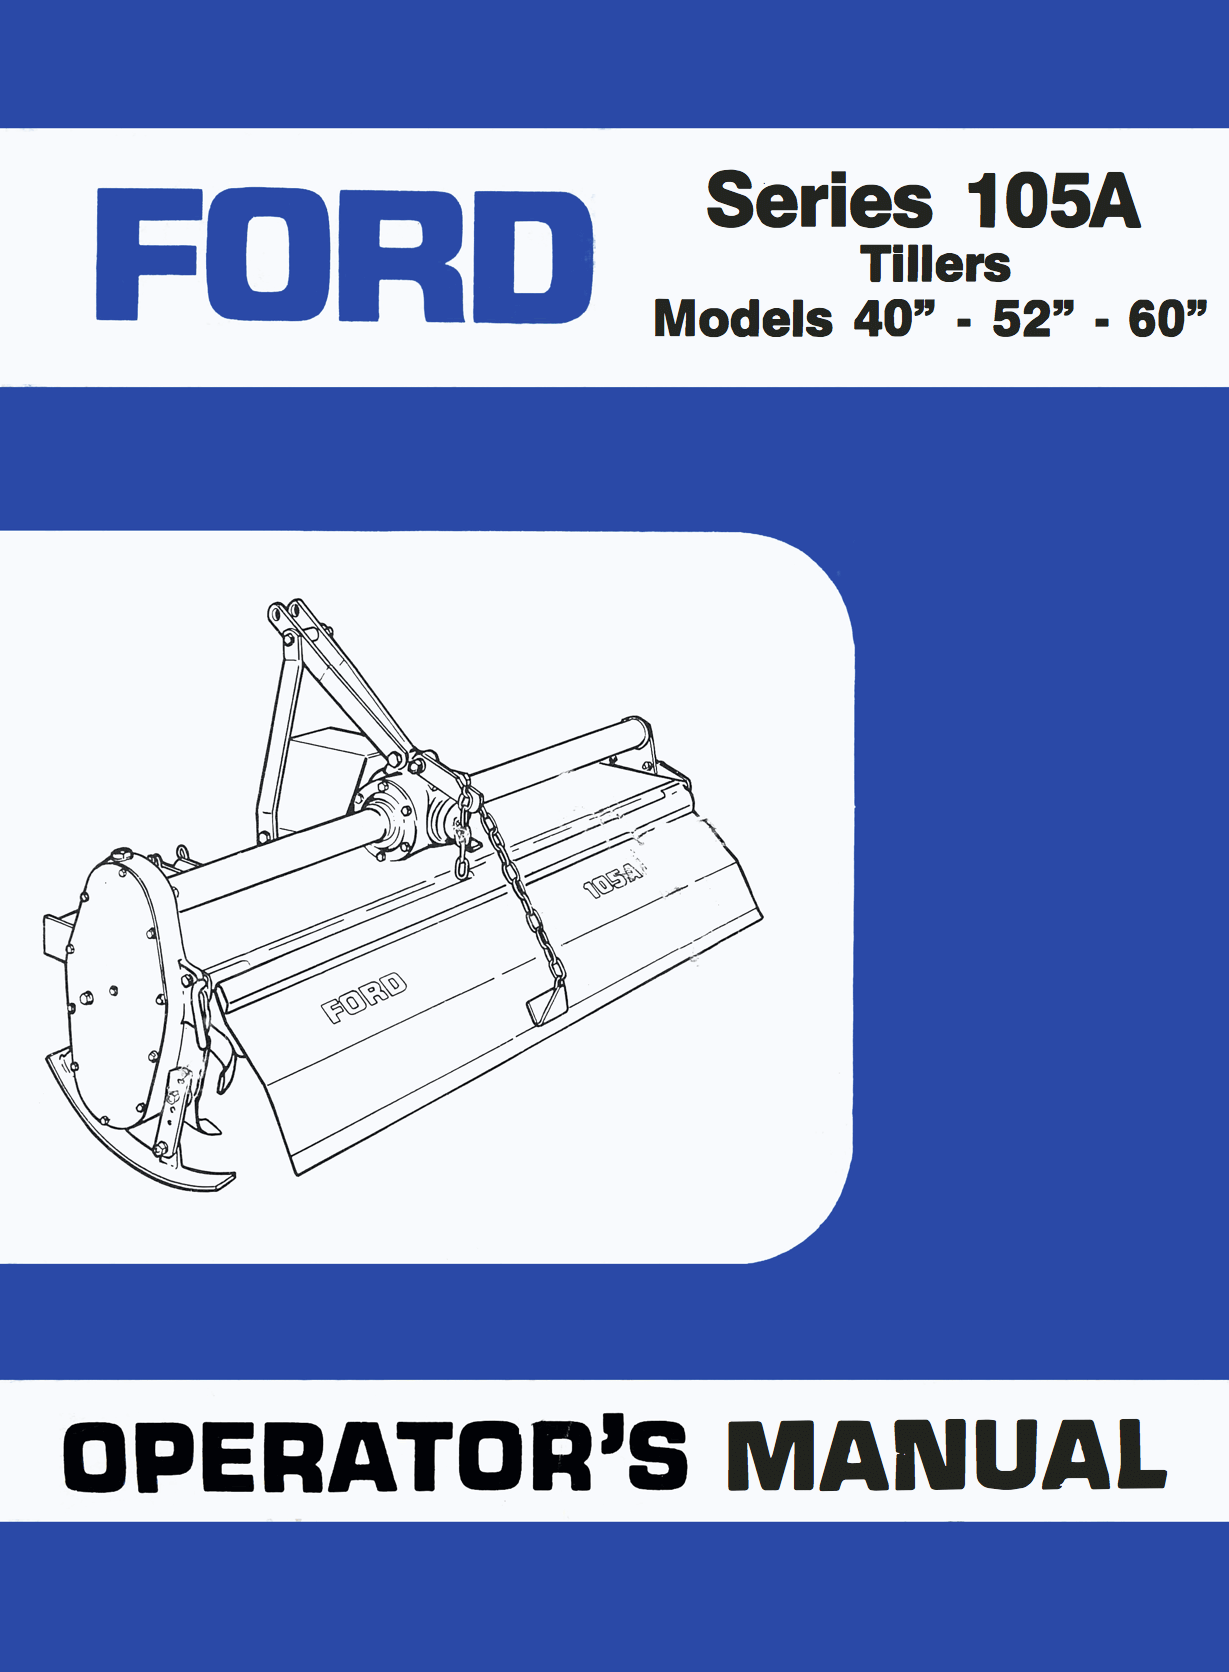 Ford Series 105A Tillers - Operator's Manual - Ag Manuals - A Provider of Digital Farm Manuals - 1